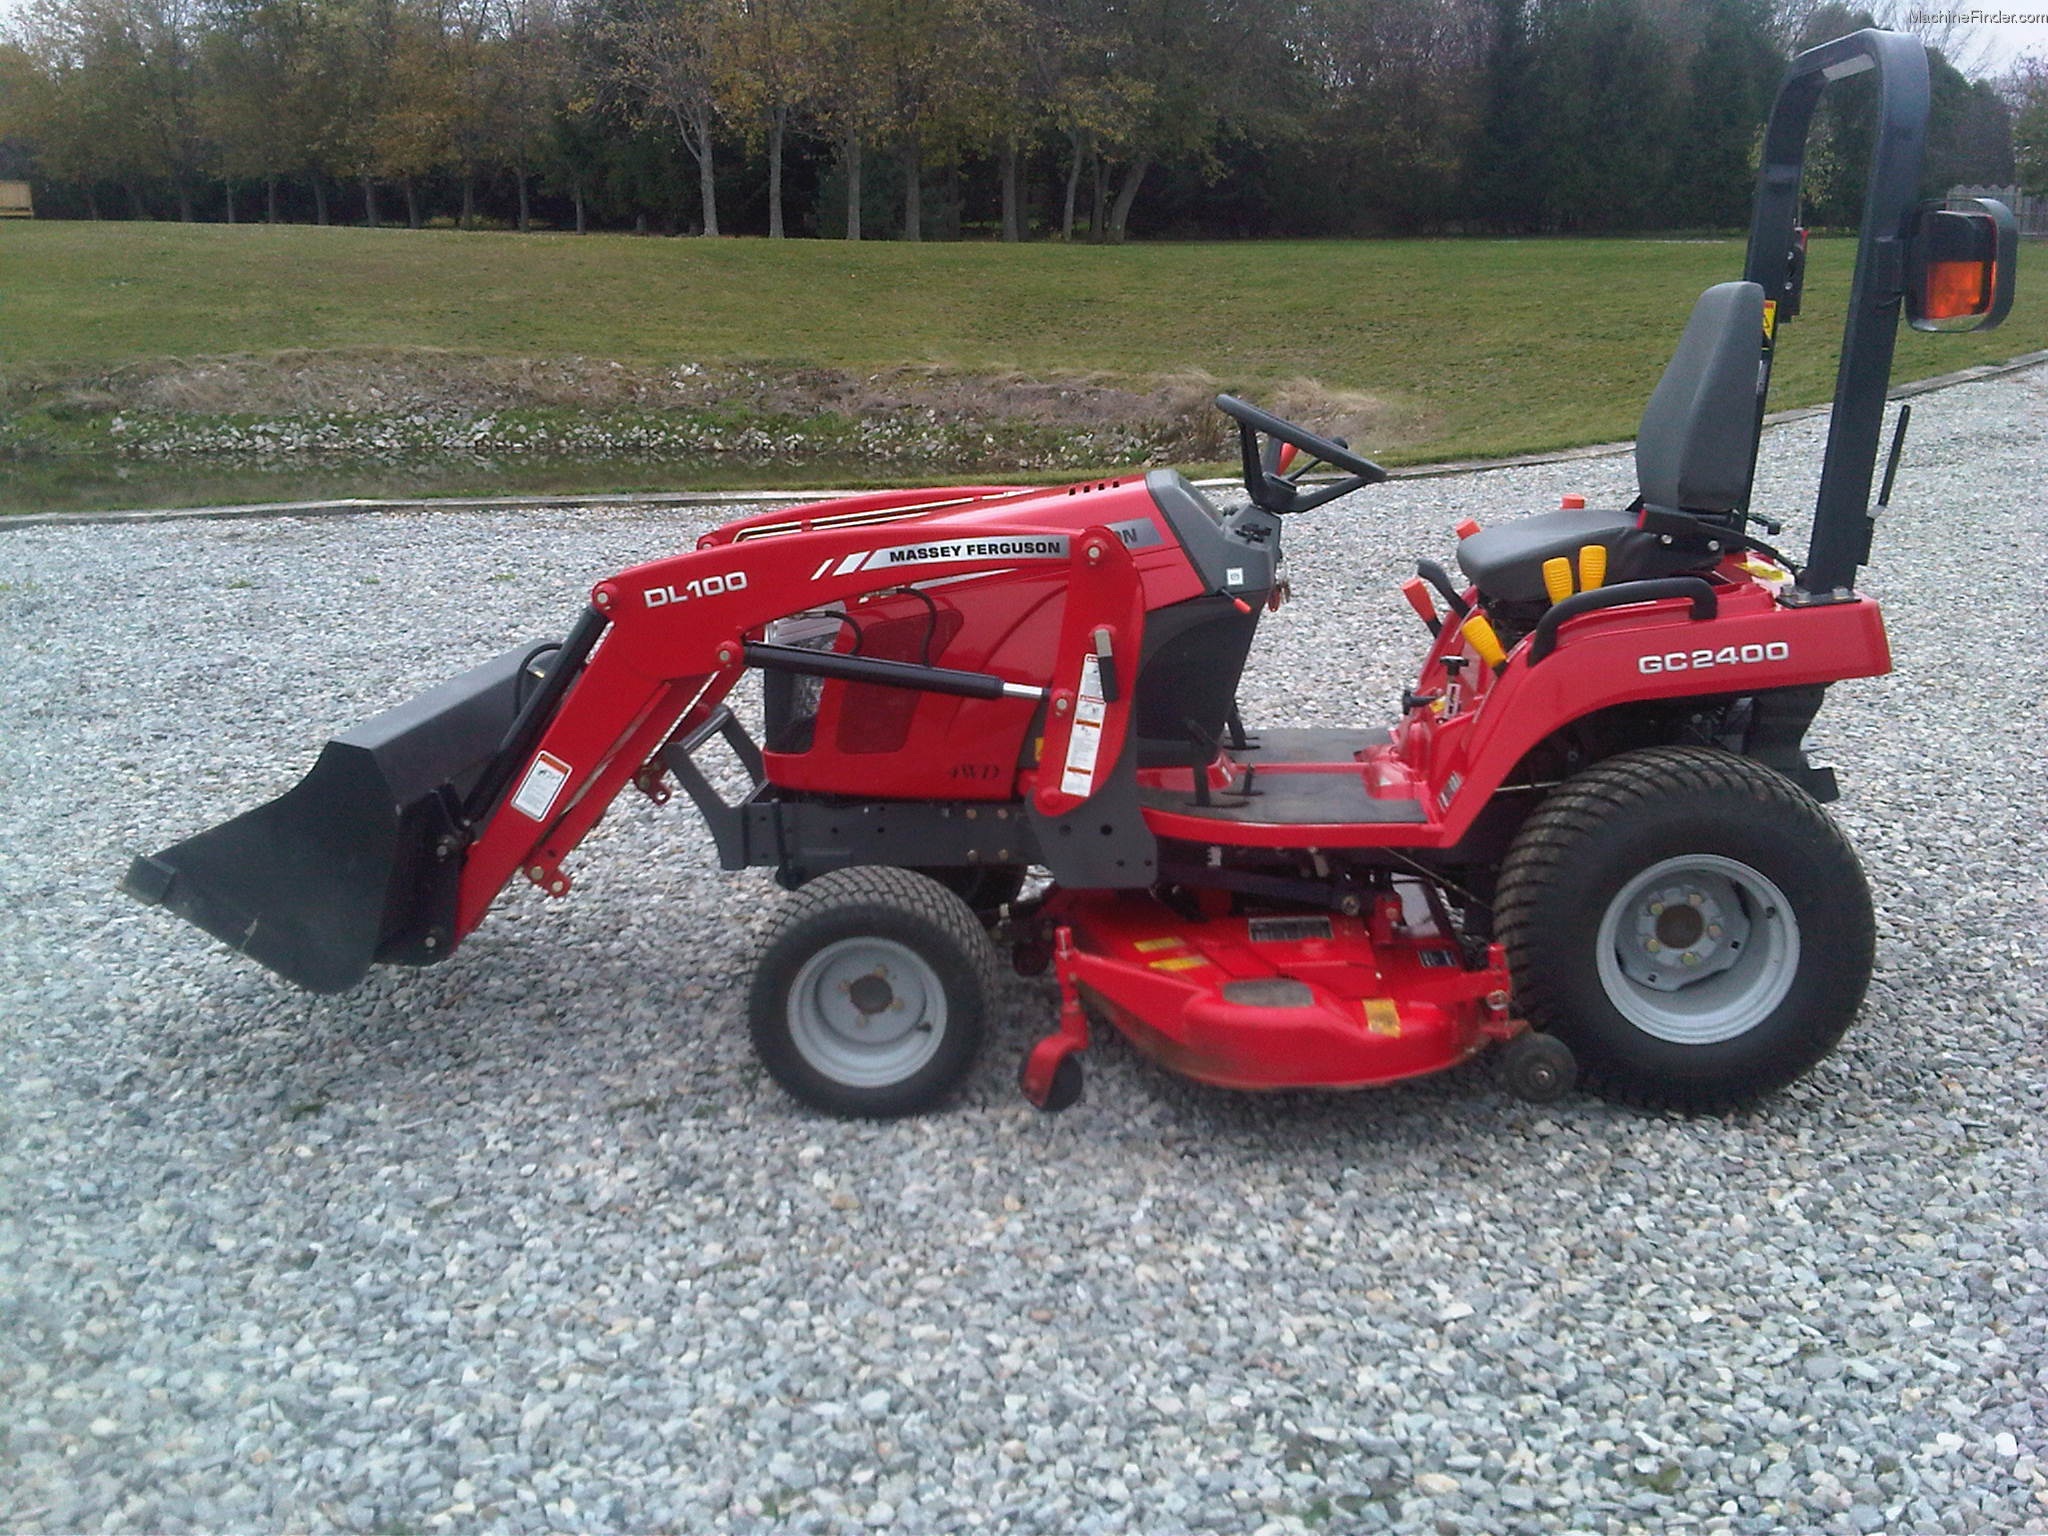 2010 Massey - Ferguson GC2400 Tractors - Compact (1-40hp.) - John ...